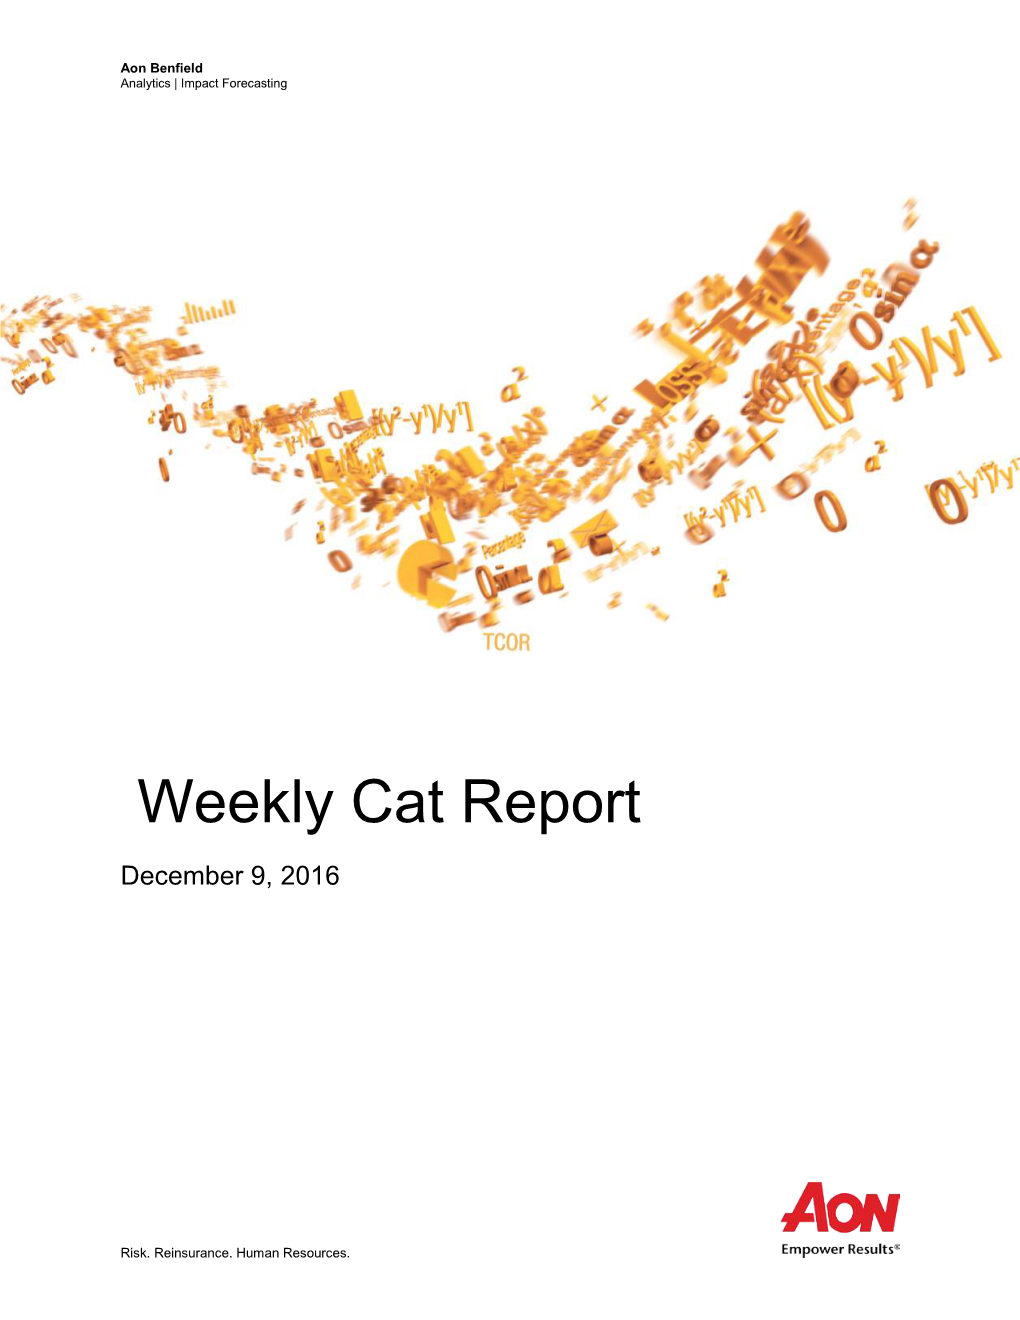 Weekly Cat Report December 9, 2016